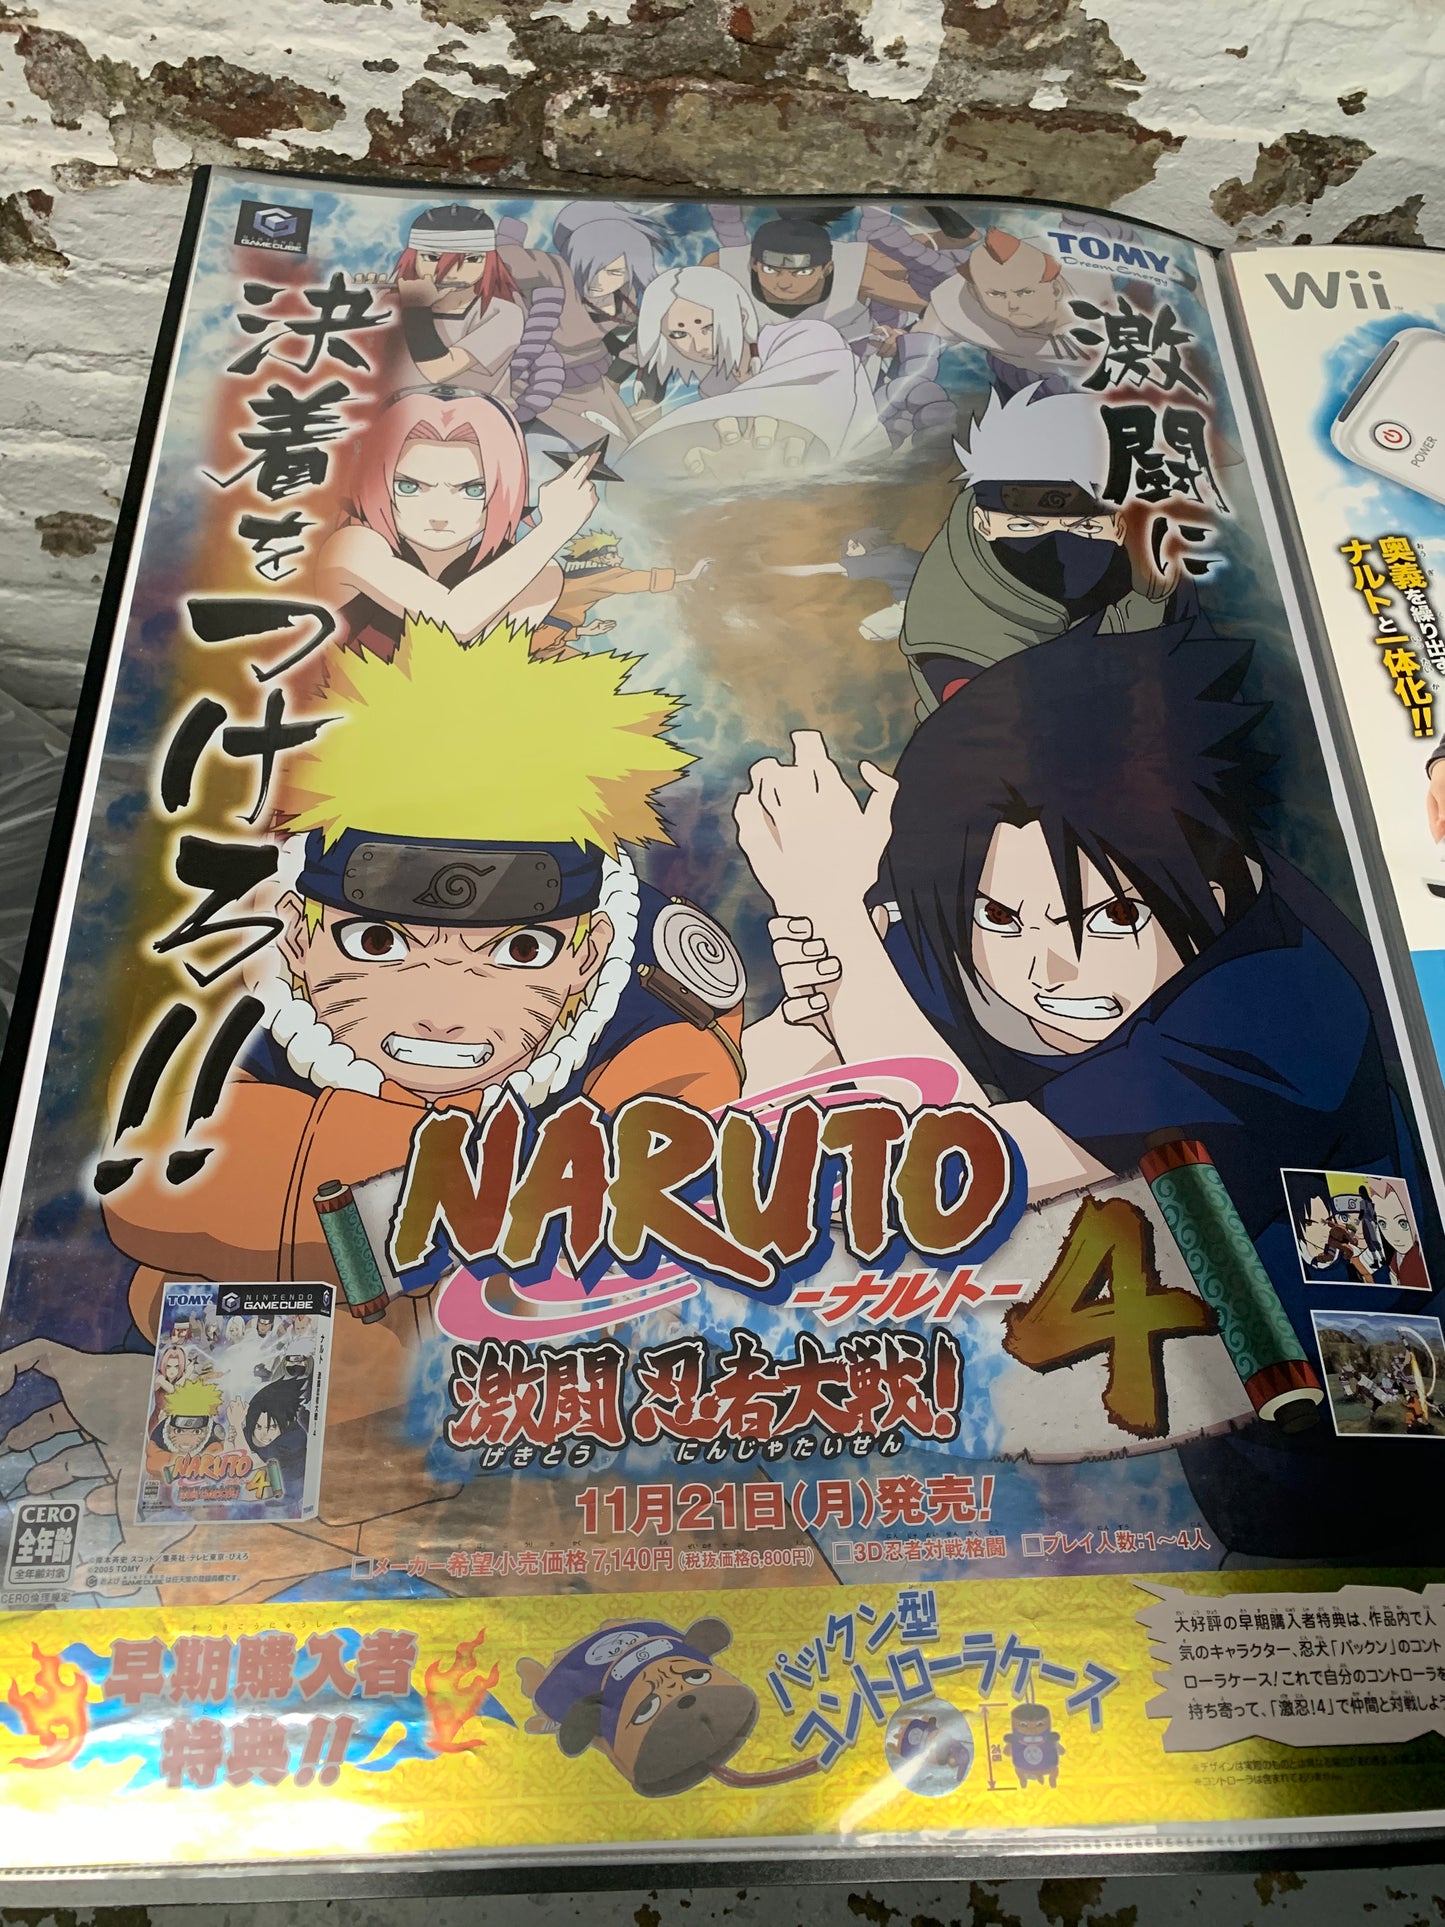 Naruto Gekitou Ninja Taisen 4 GameCube 2005 B2 Poster